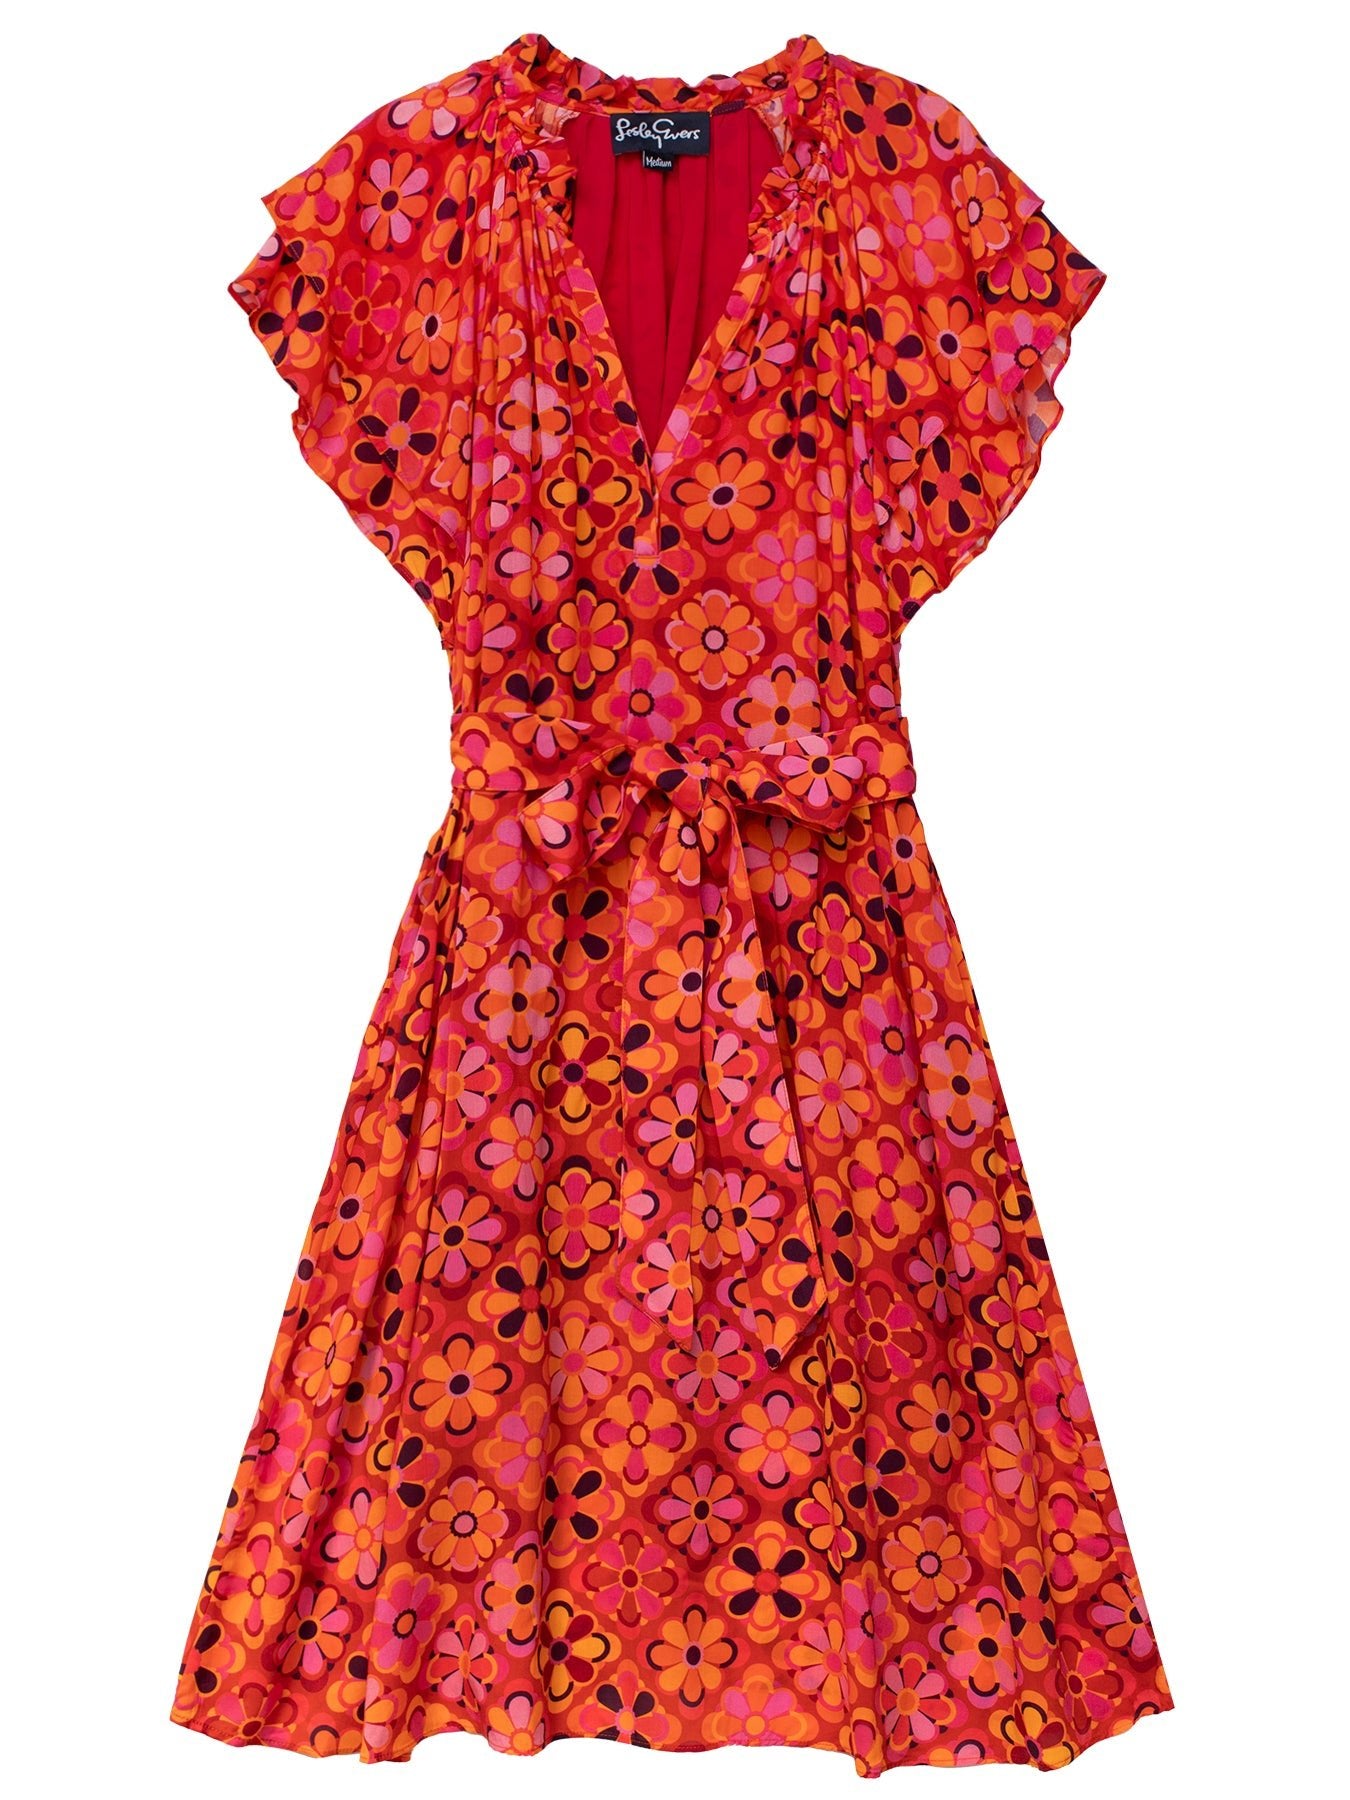 MATILDA Jubilee Pink - Lesley Evers - ARDEN - Dress - Knee Length Dress